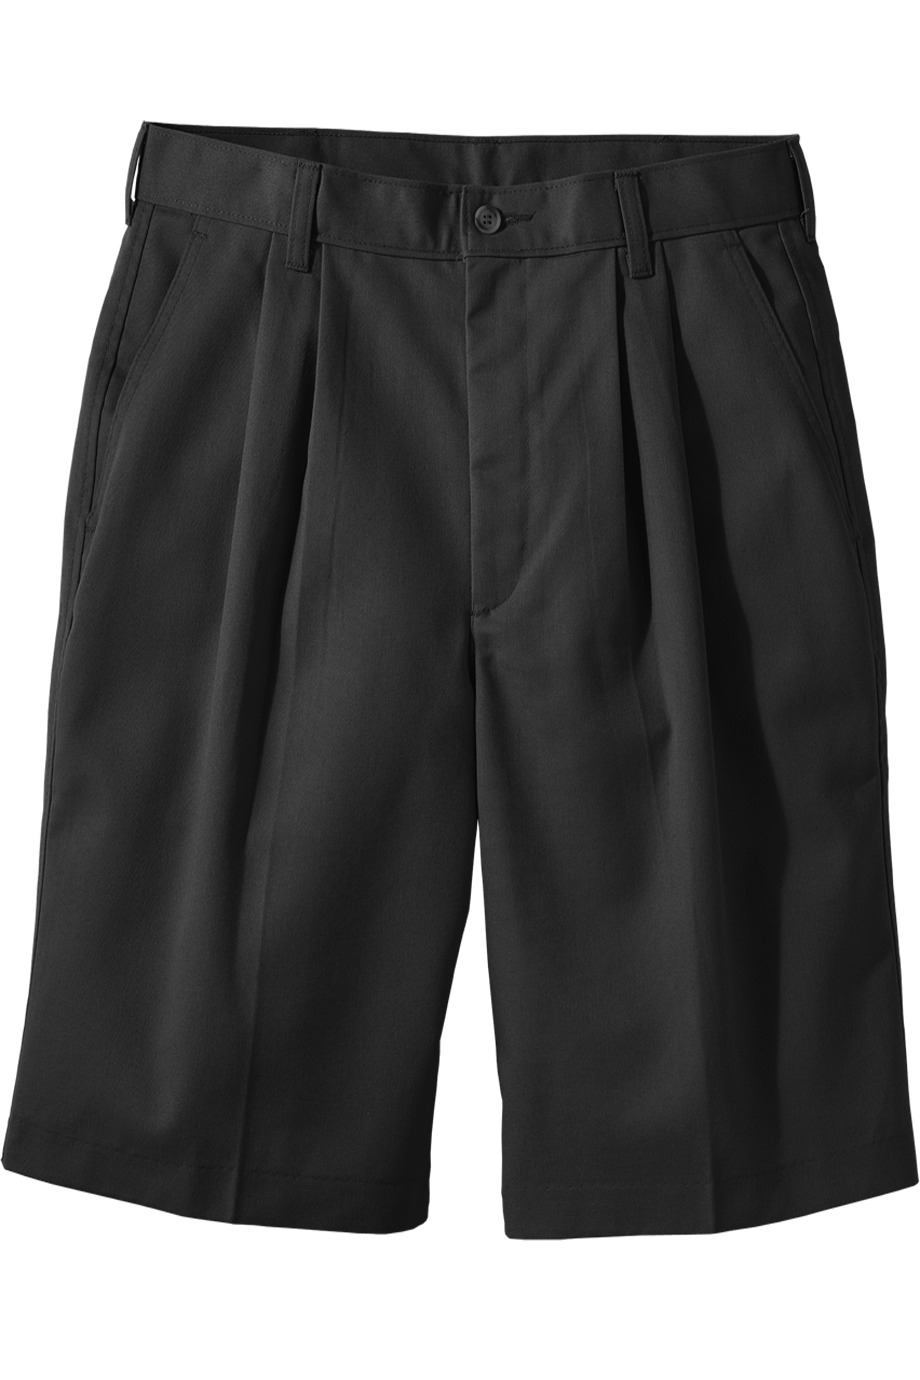 Edwards Garment 2480 - Men's Pleated Short